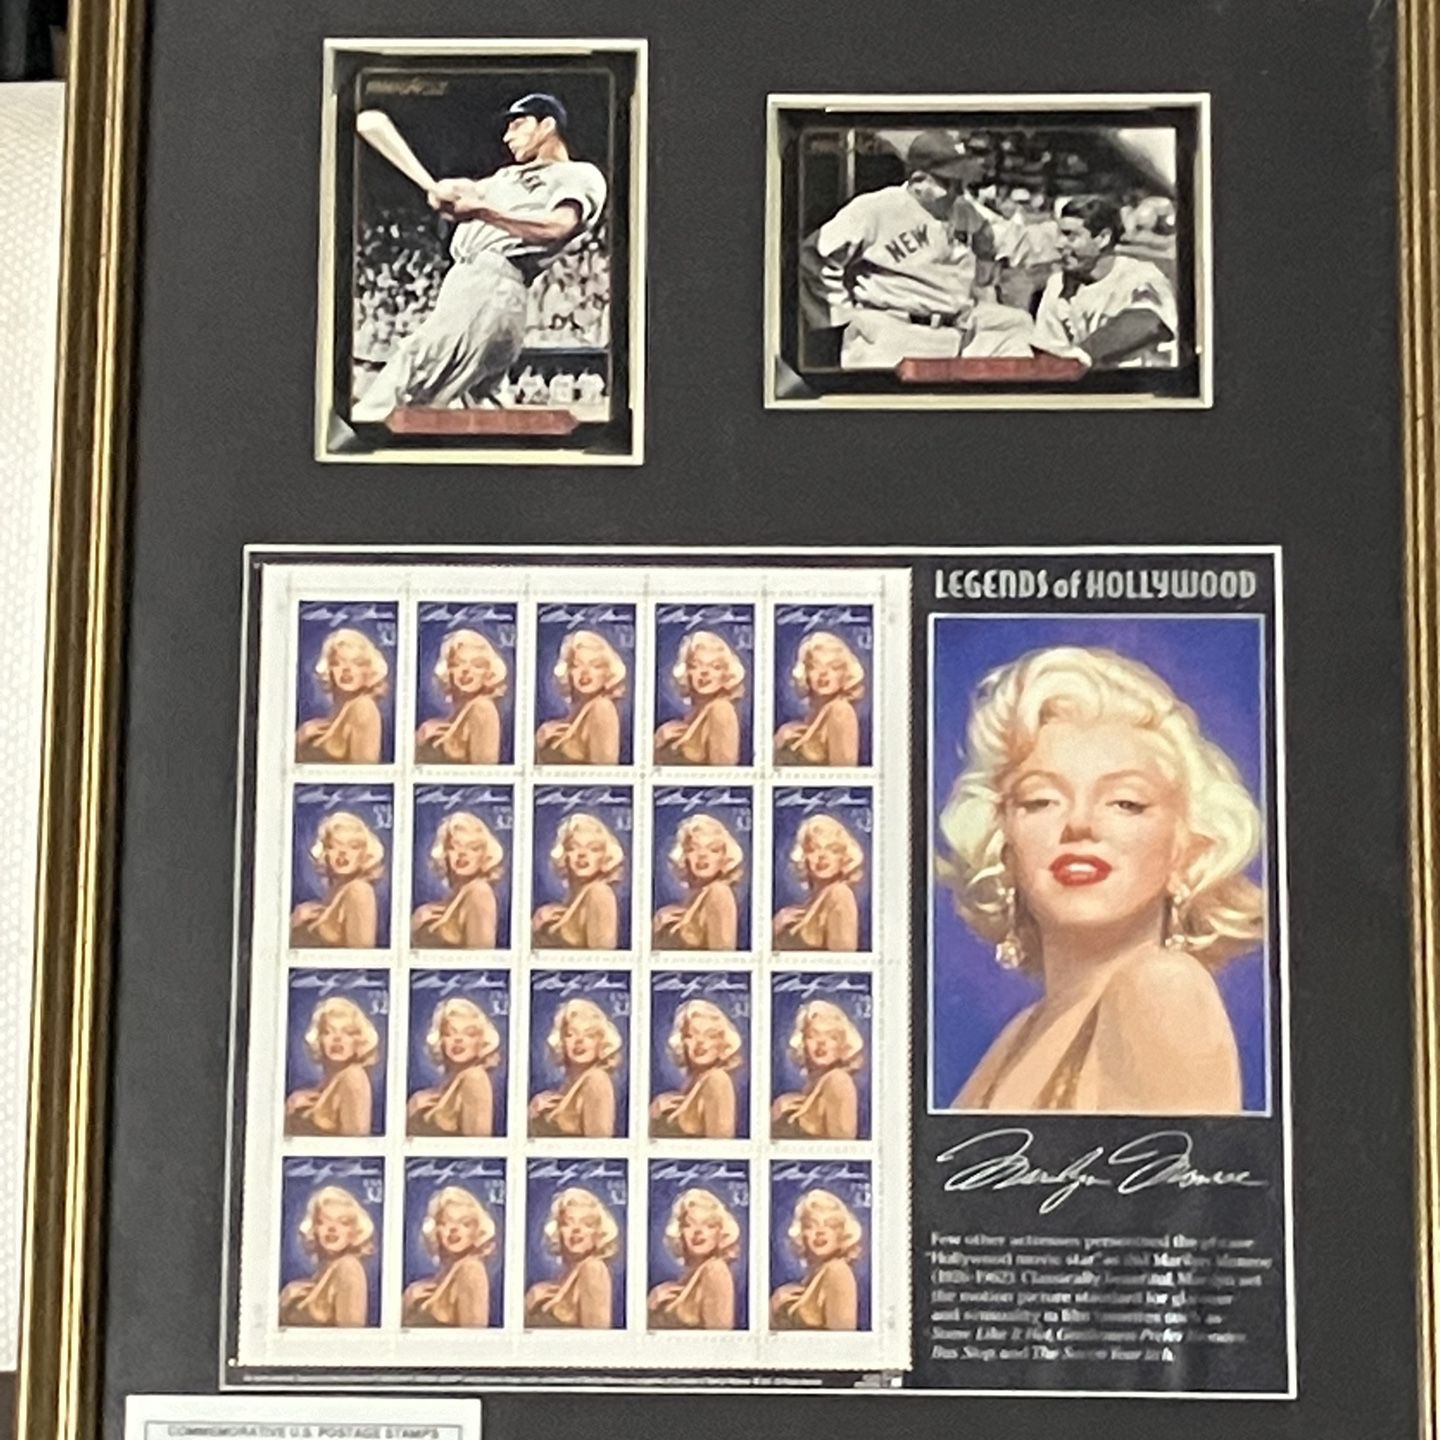 Joe DiMaggio, baseball trading card and Marilyn Monroe commemorative stamp